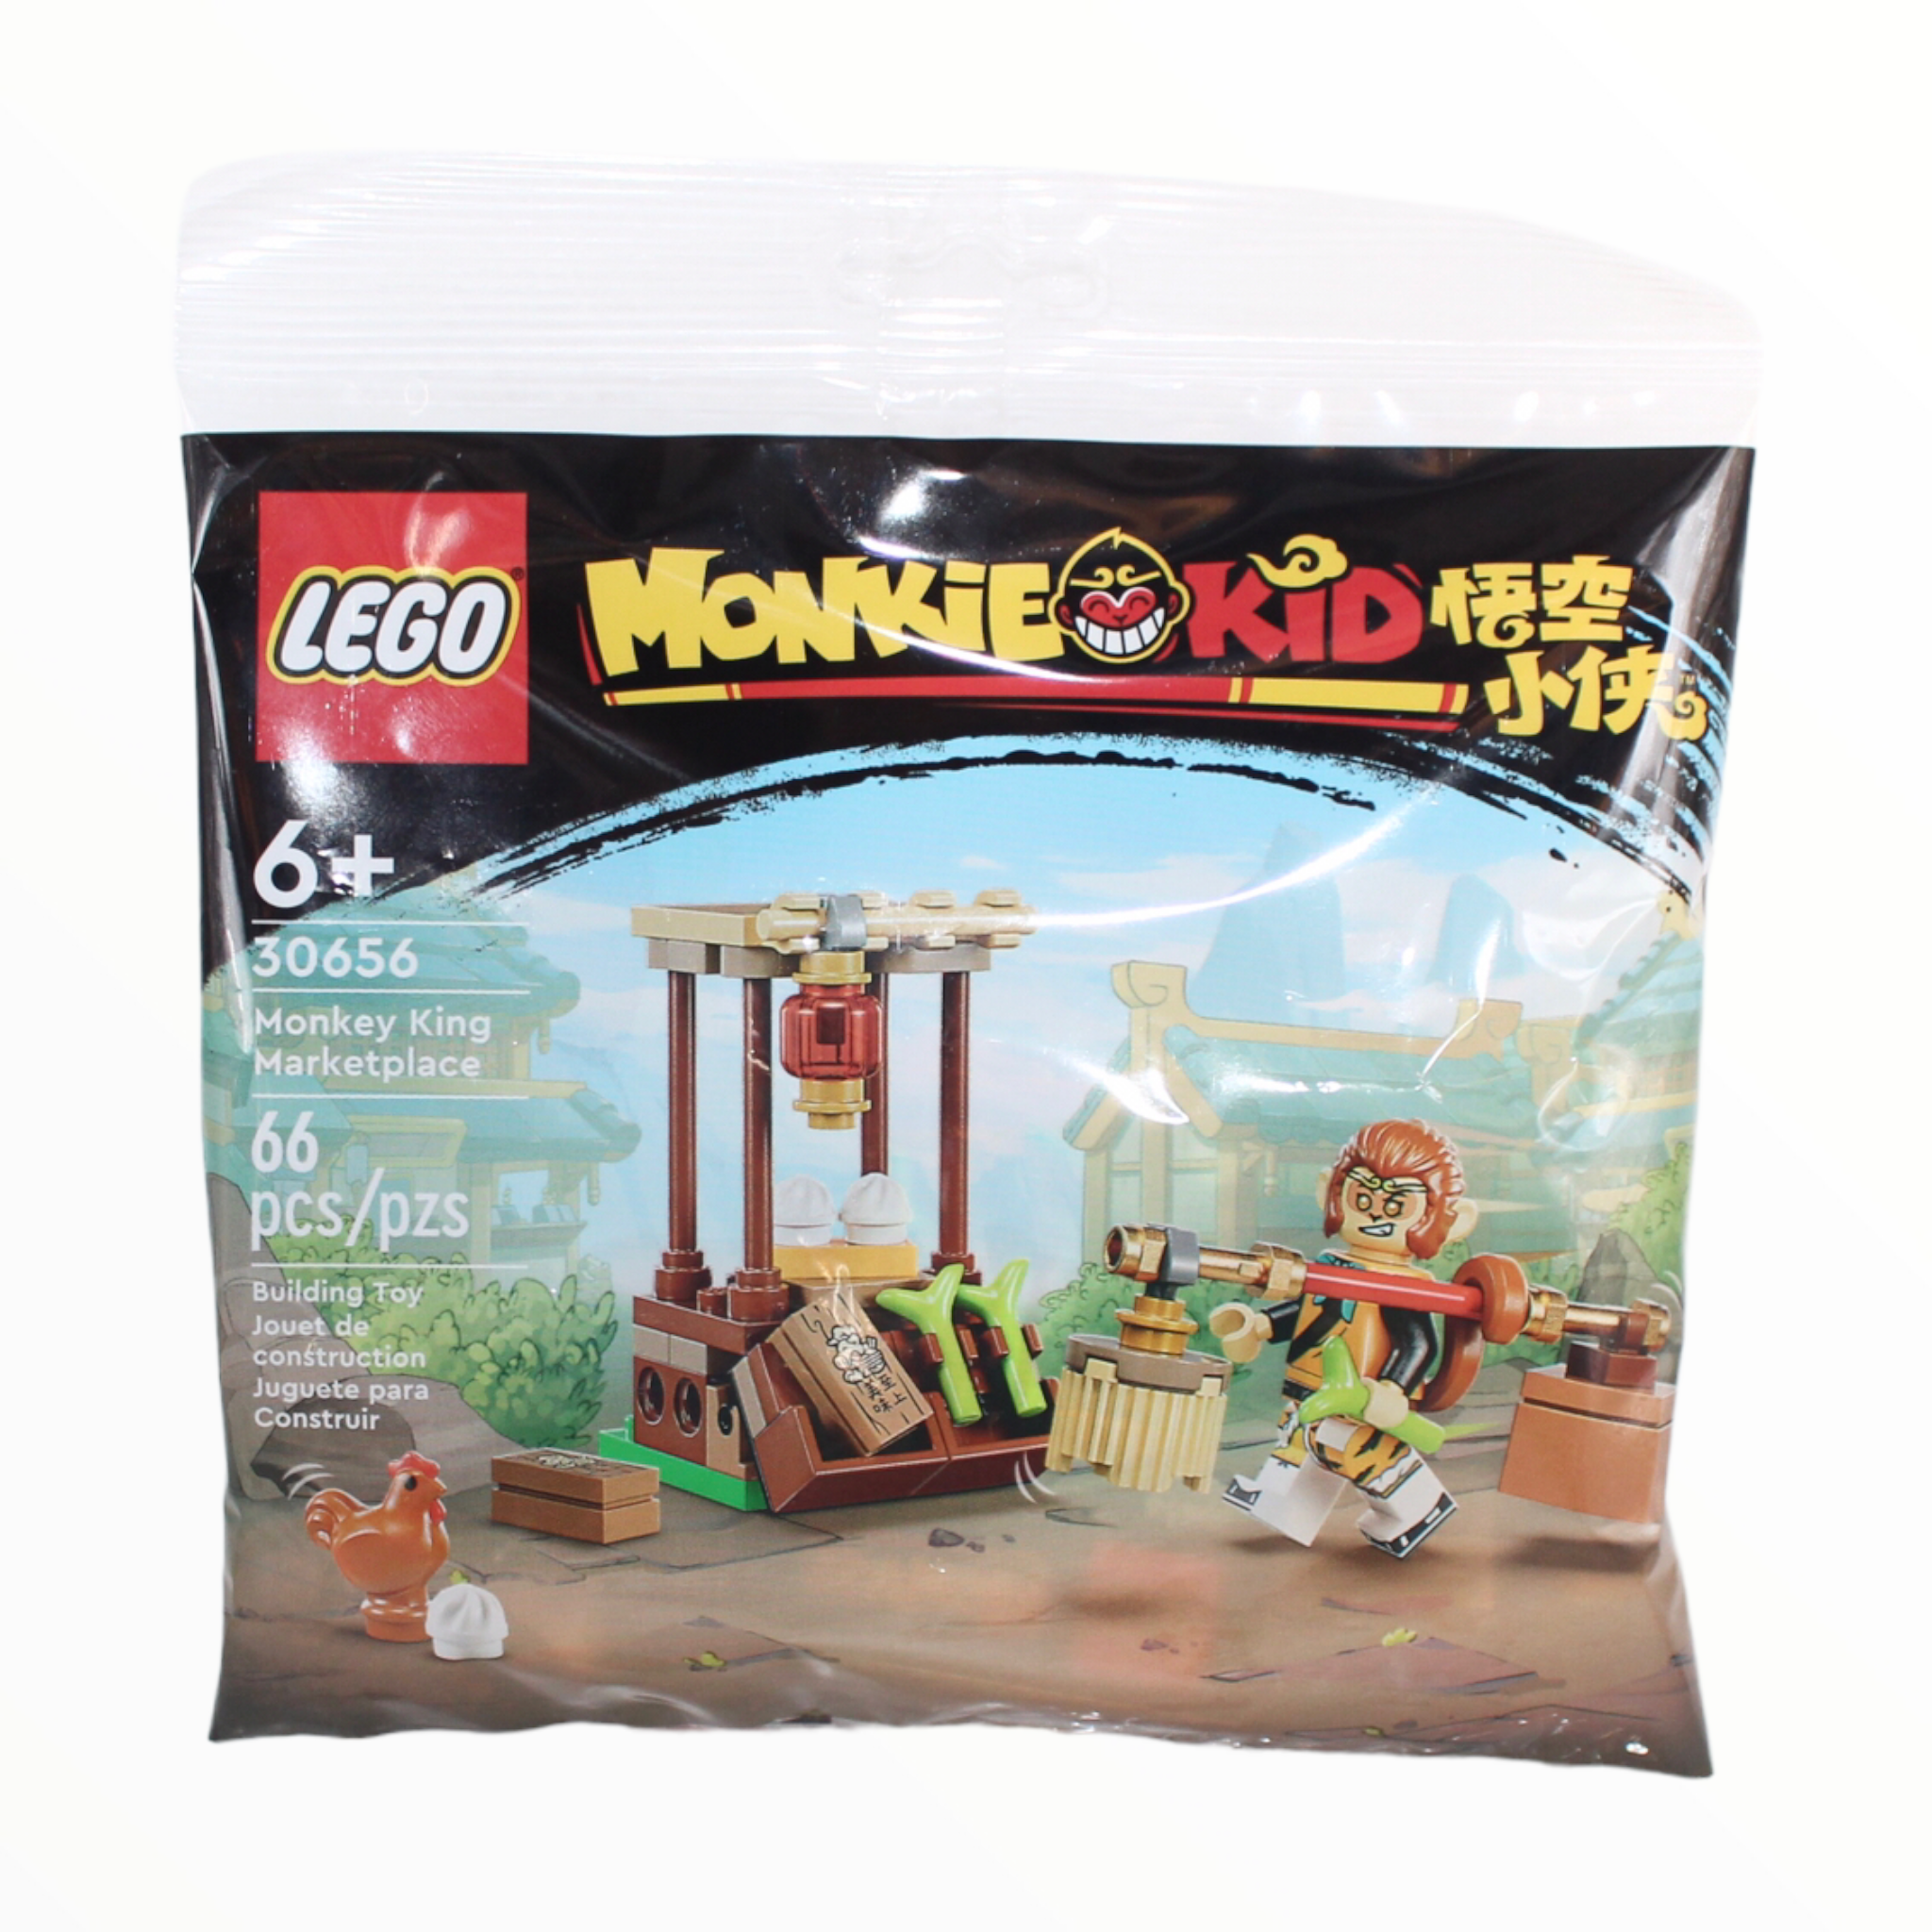 Polybag 30656 Monkie Kid Monkey King Marketplace